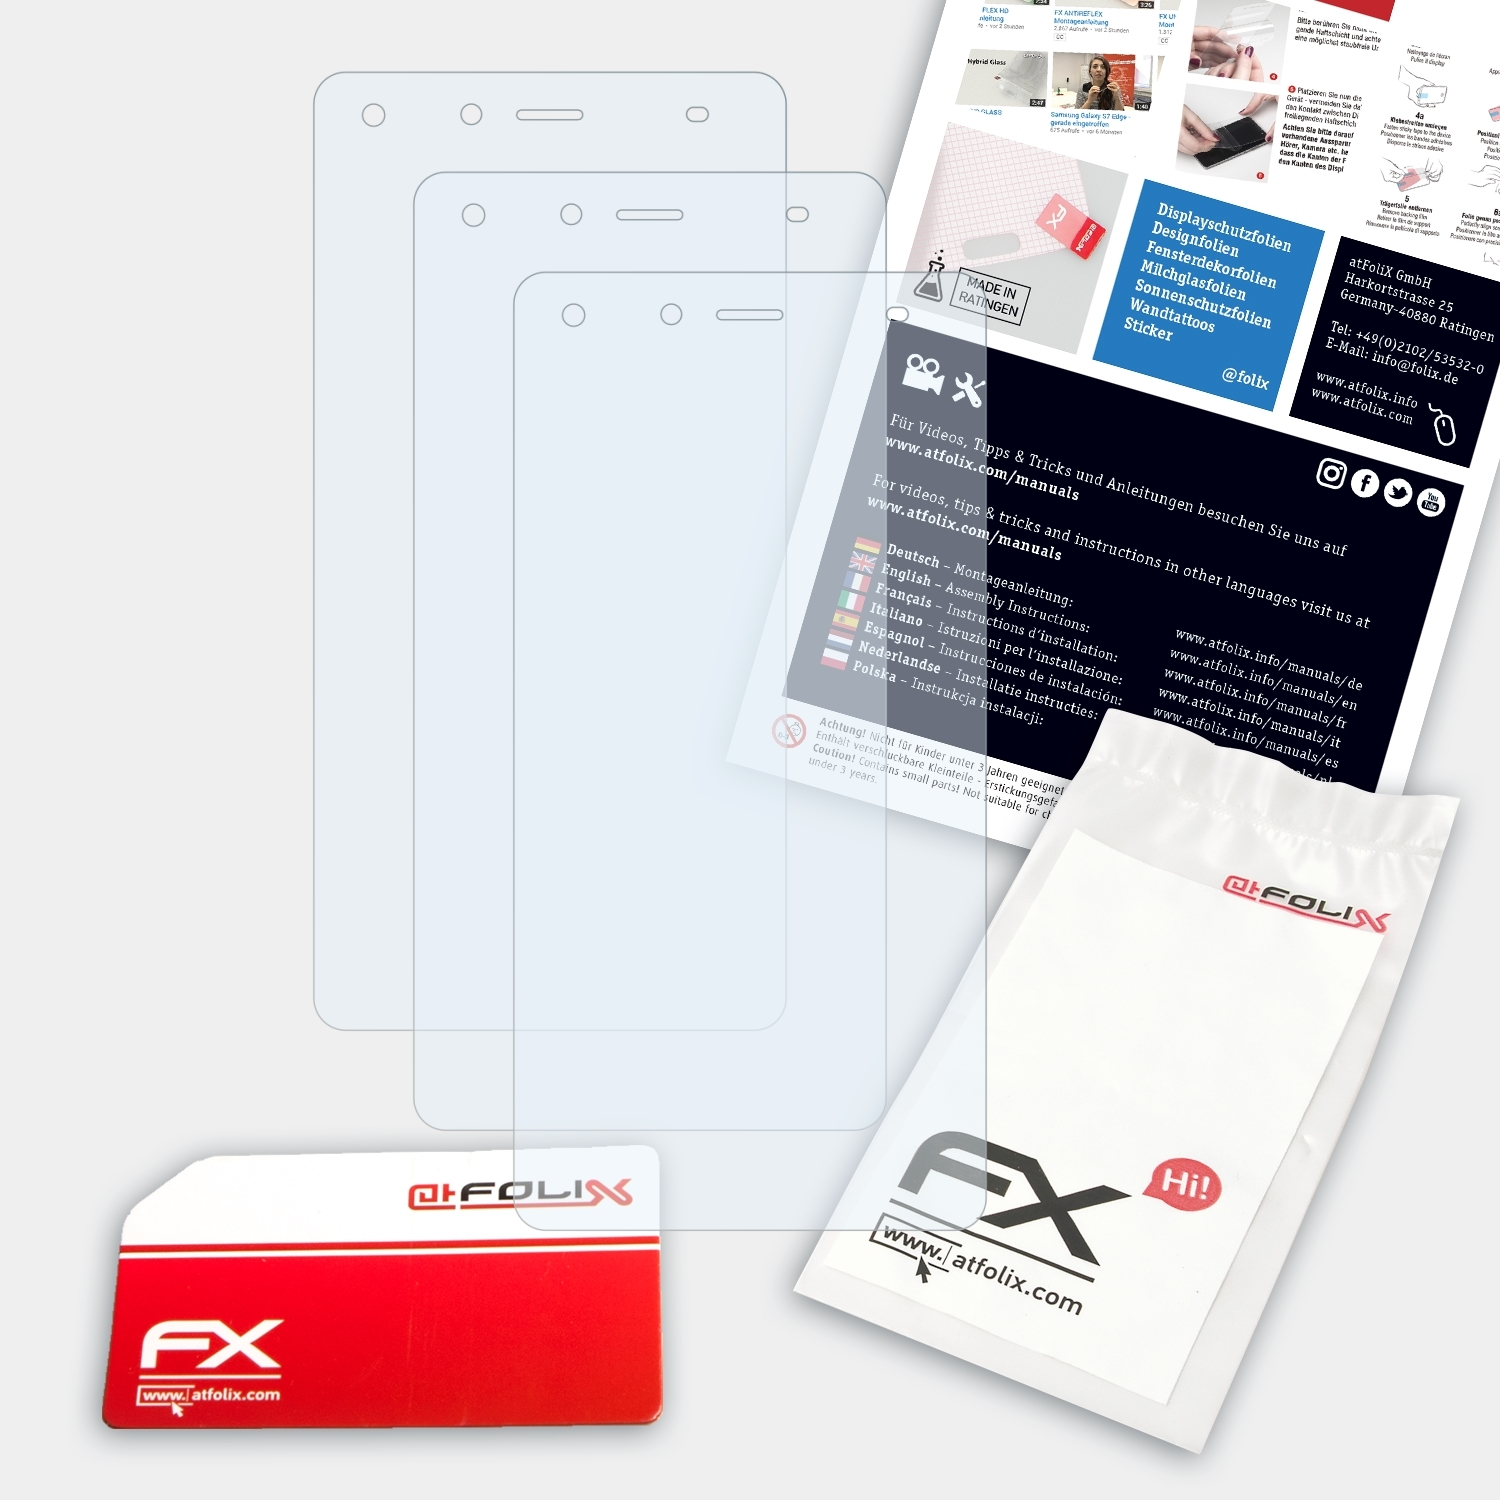 Infinix Hot ATFOLIX 4 Pro) FX-Clear Displayschutz(für 3x